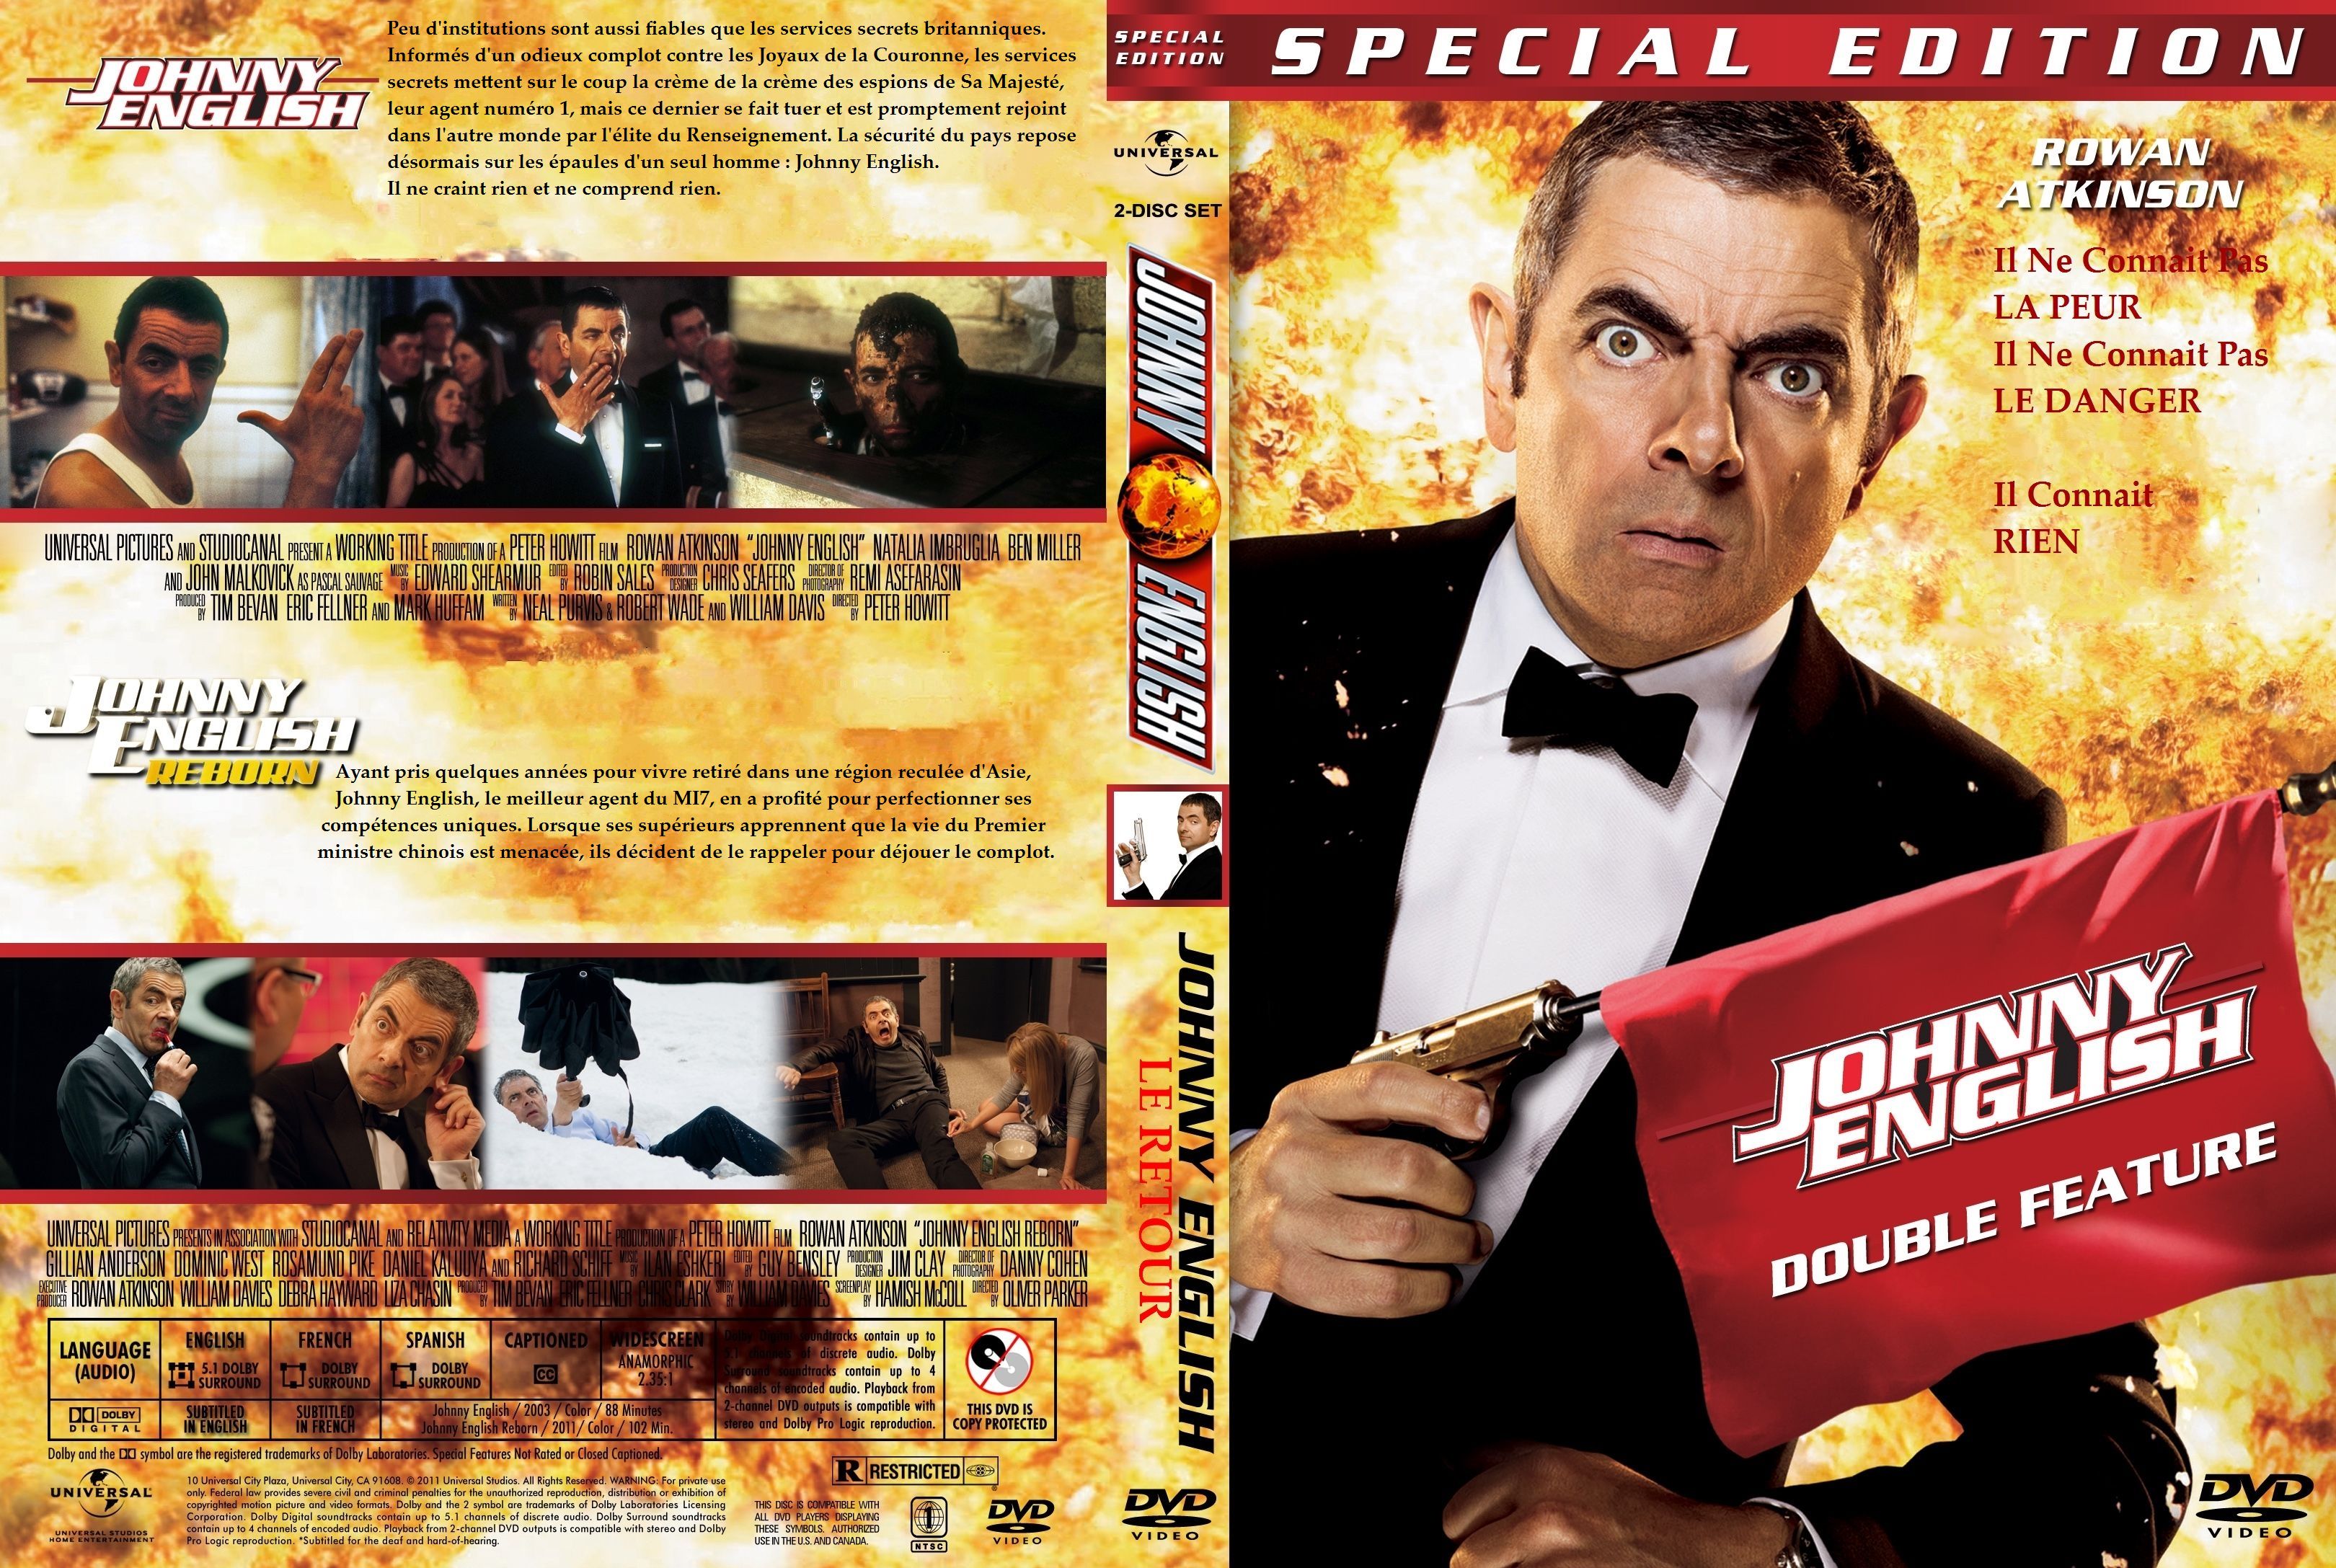 Jaquette DVD Johnny English Duologie custom